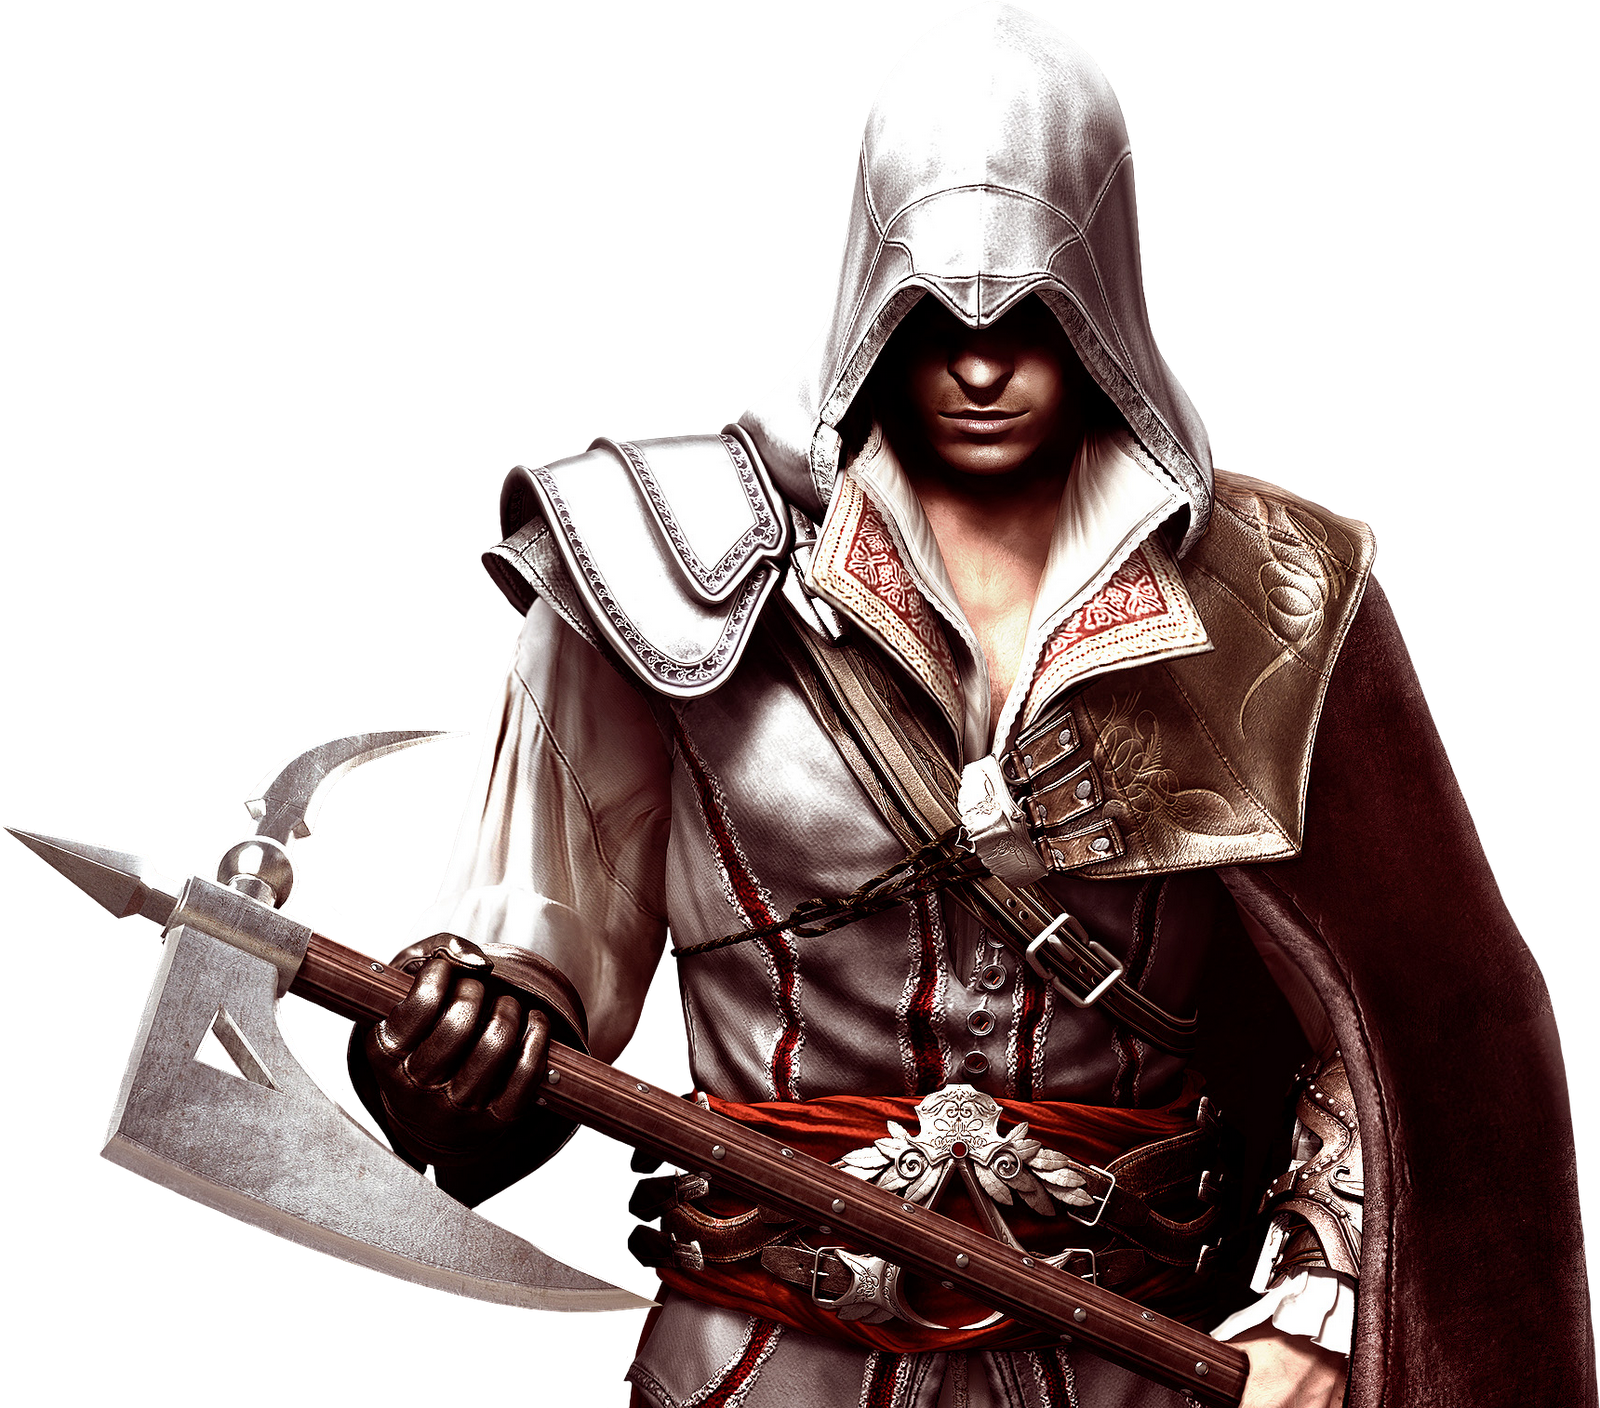 Ассасин Крид 2 Эцио Аудиторе. Эцио из ассасин 2. Assassin's Creed 2 персонажи. Assassins Creed 2 Эцио PNG.